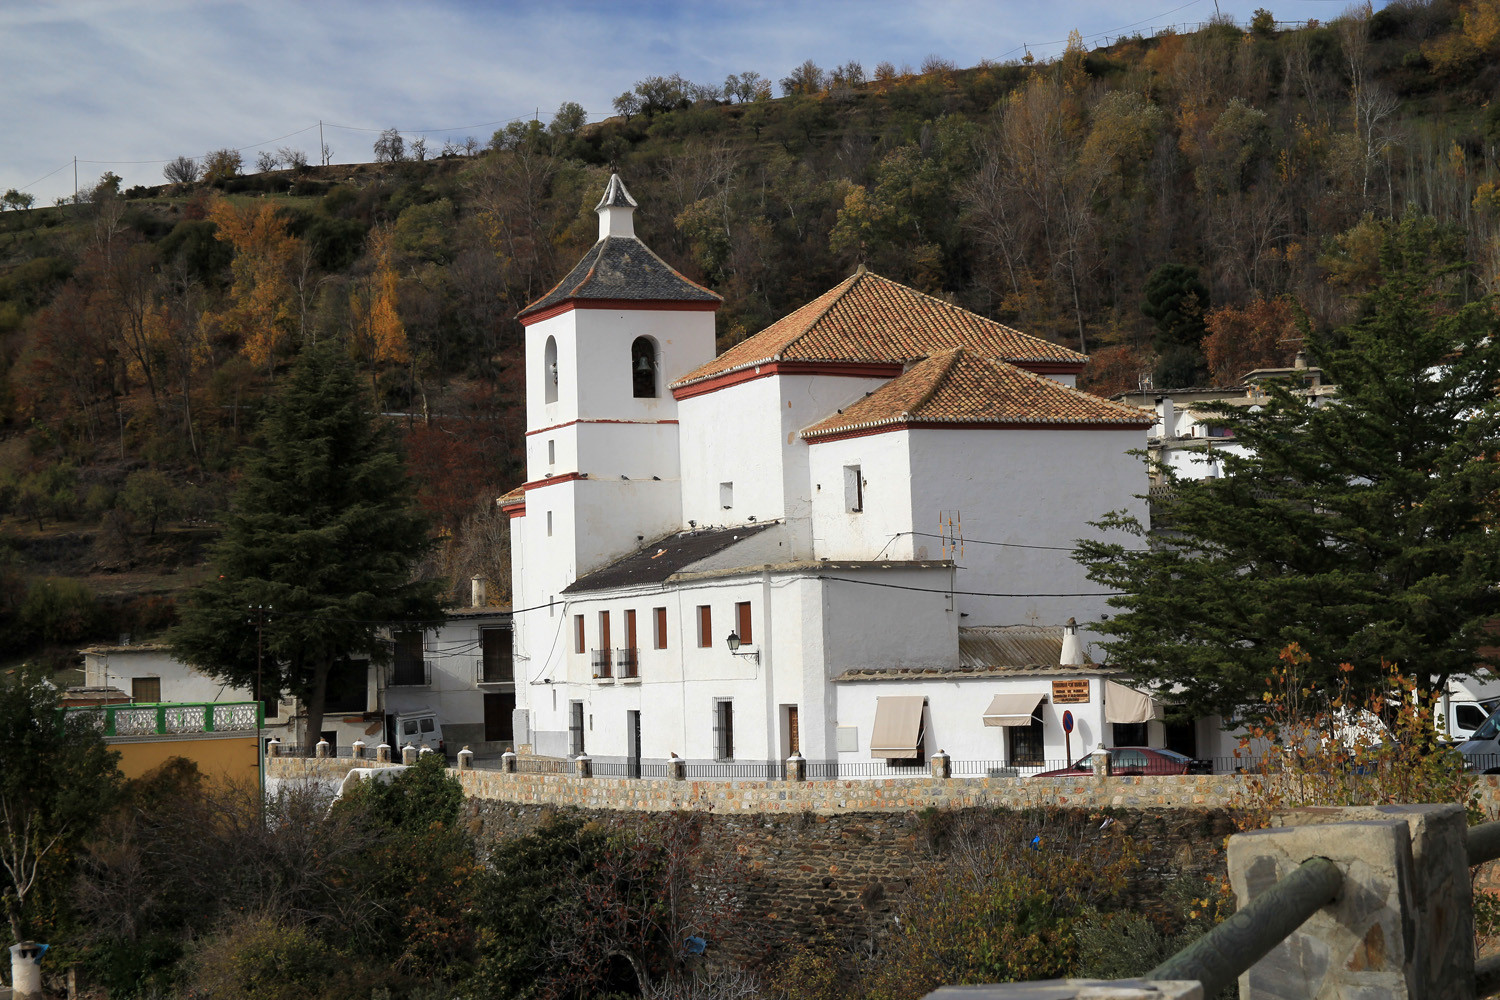 The Church of Busquístar